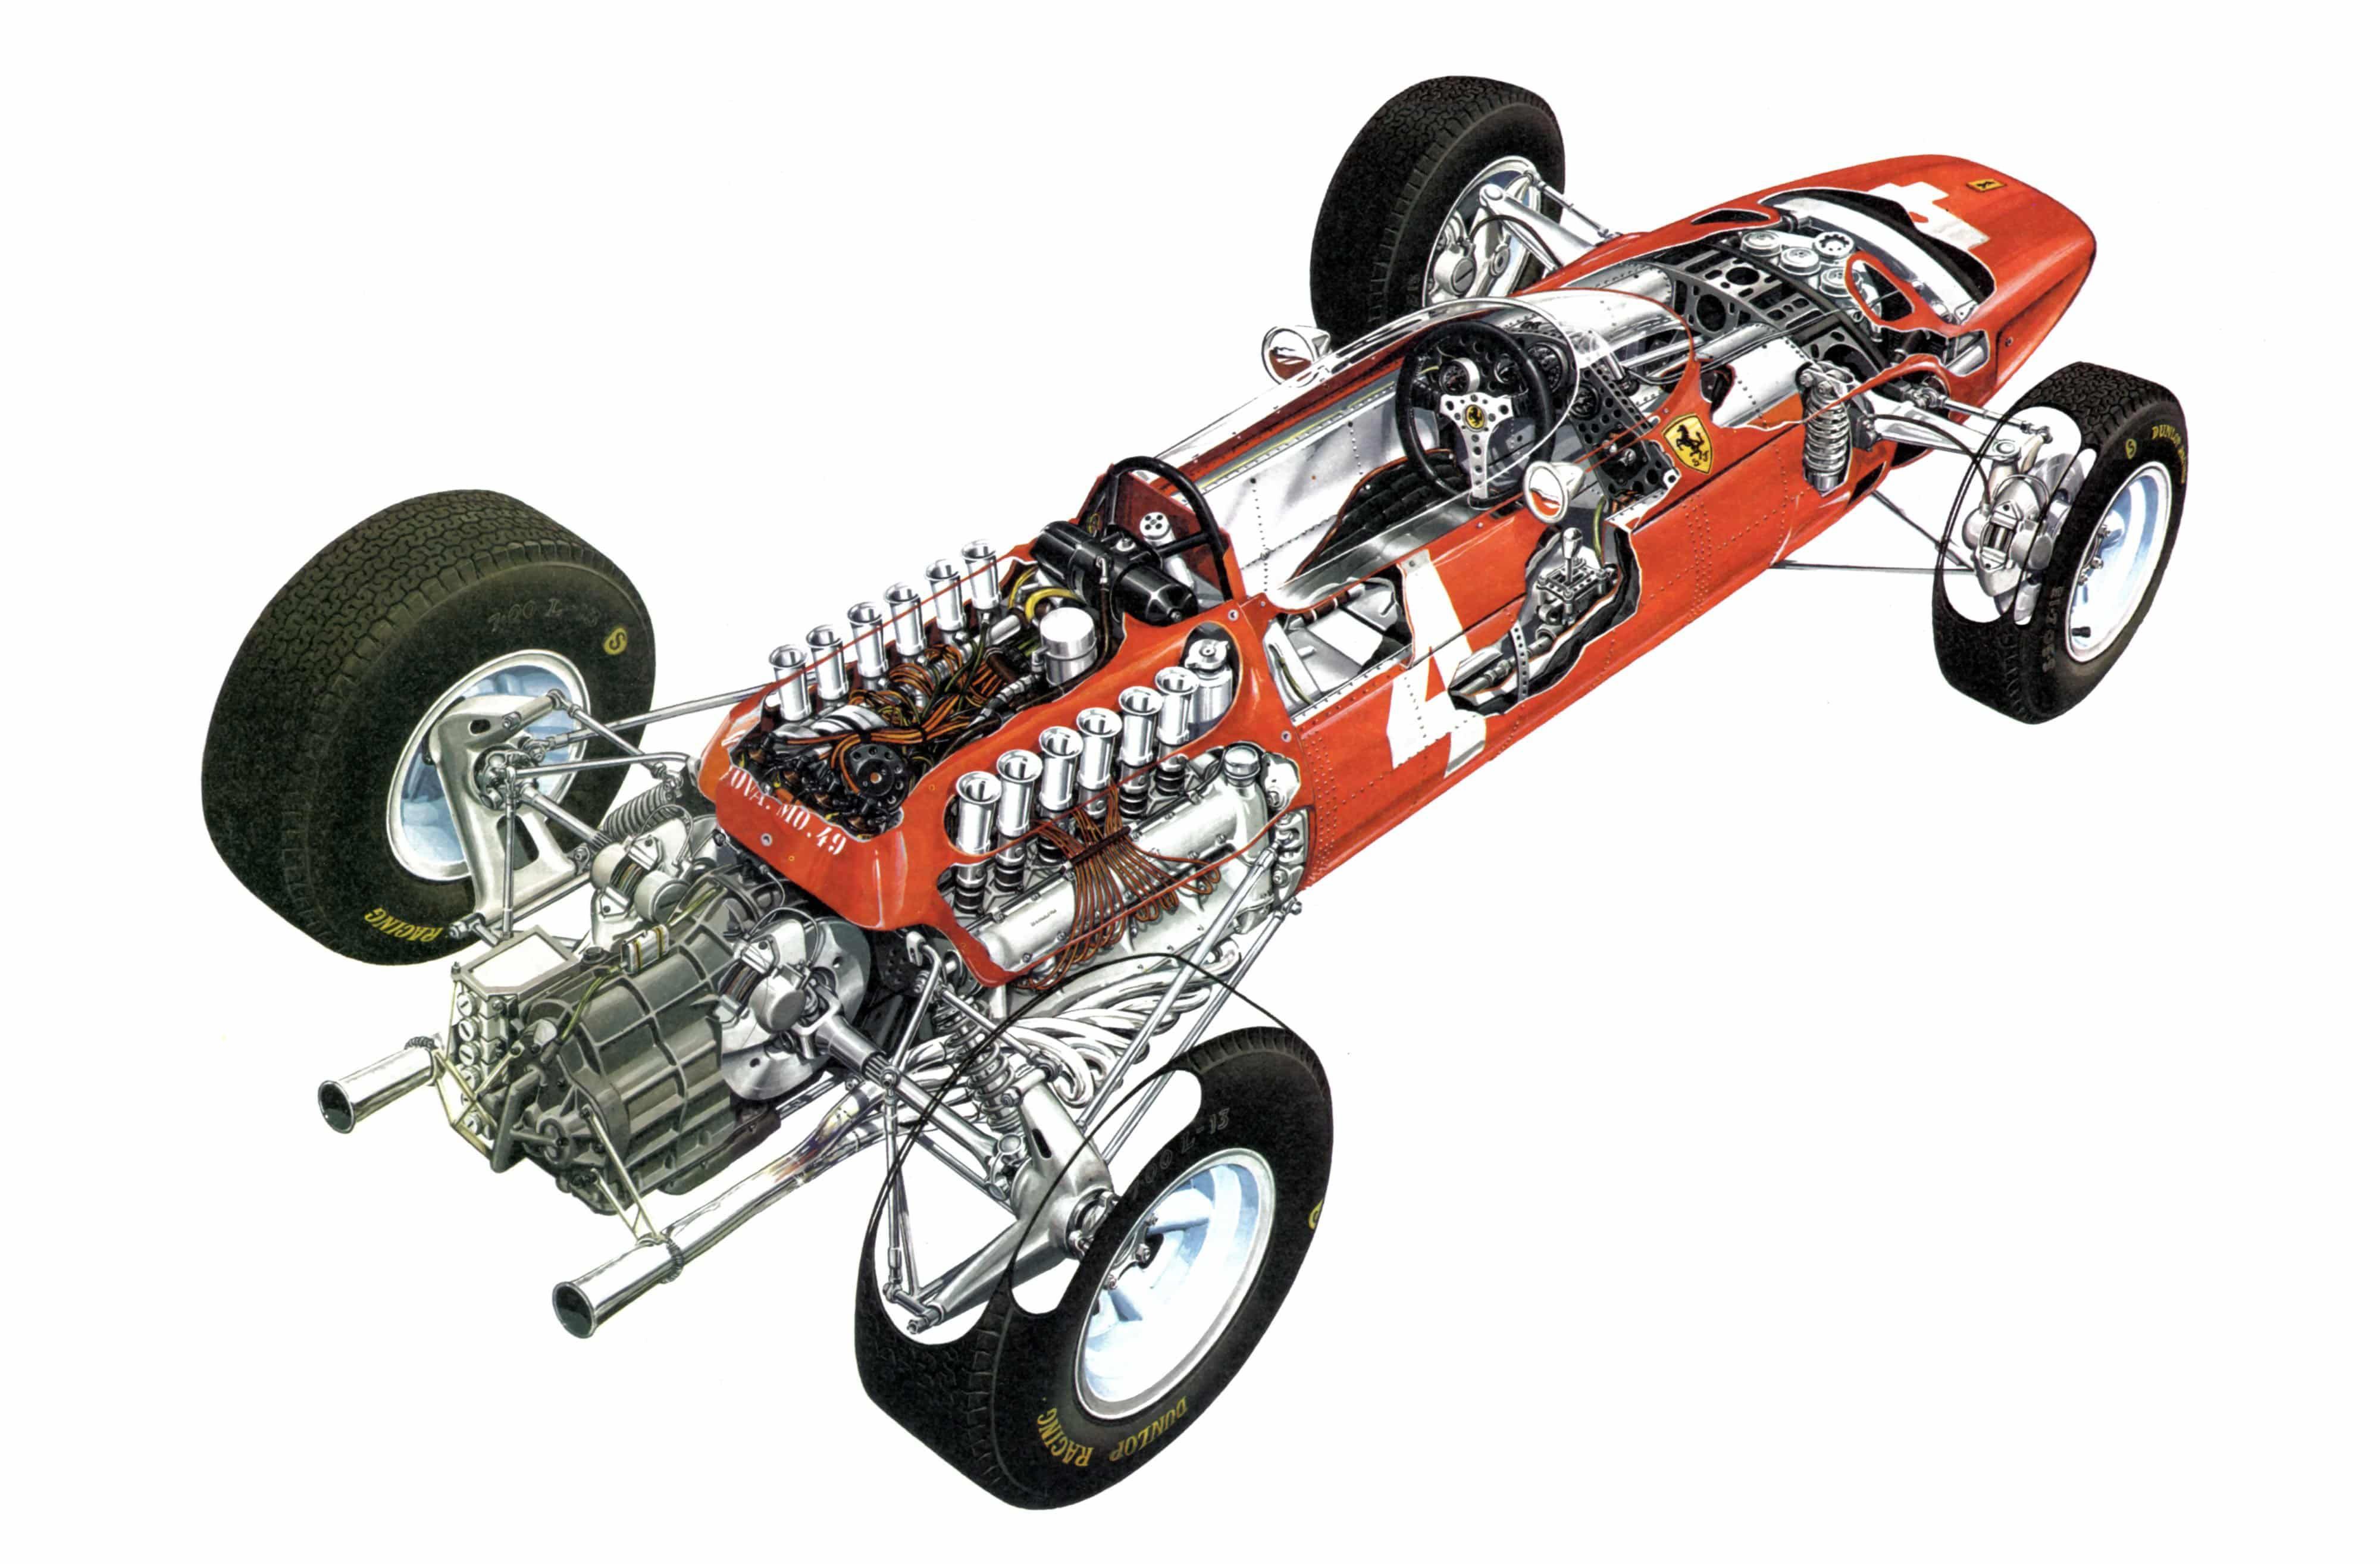 Ferrari 158 cutaway